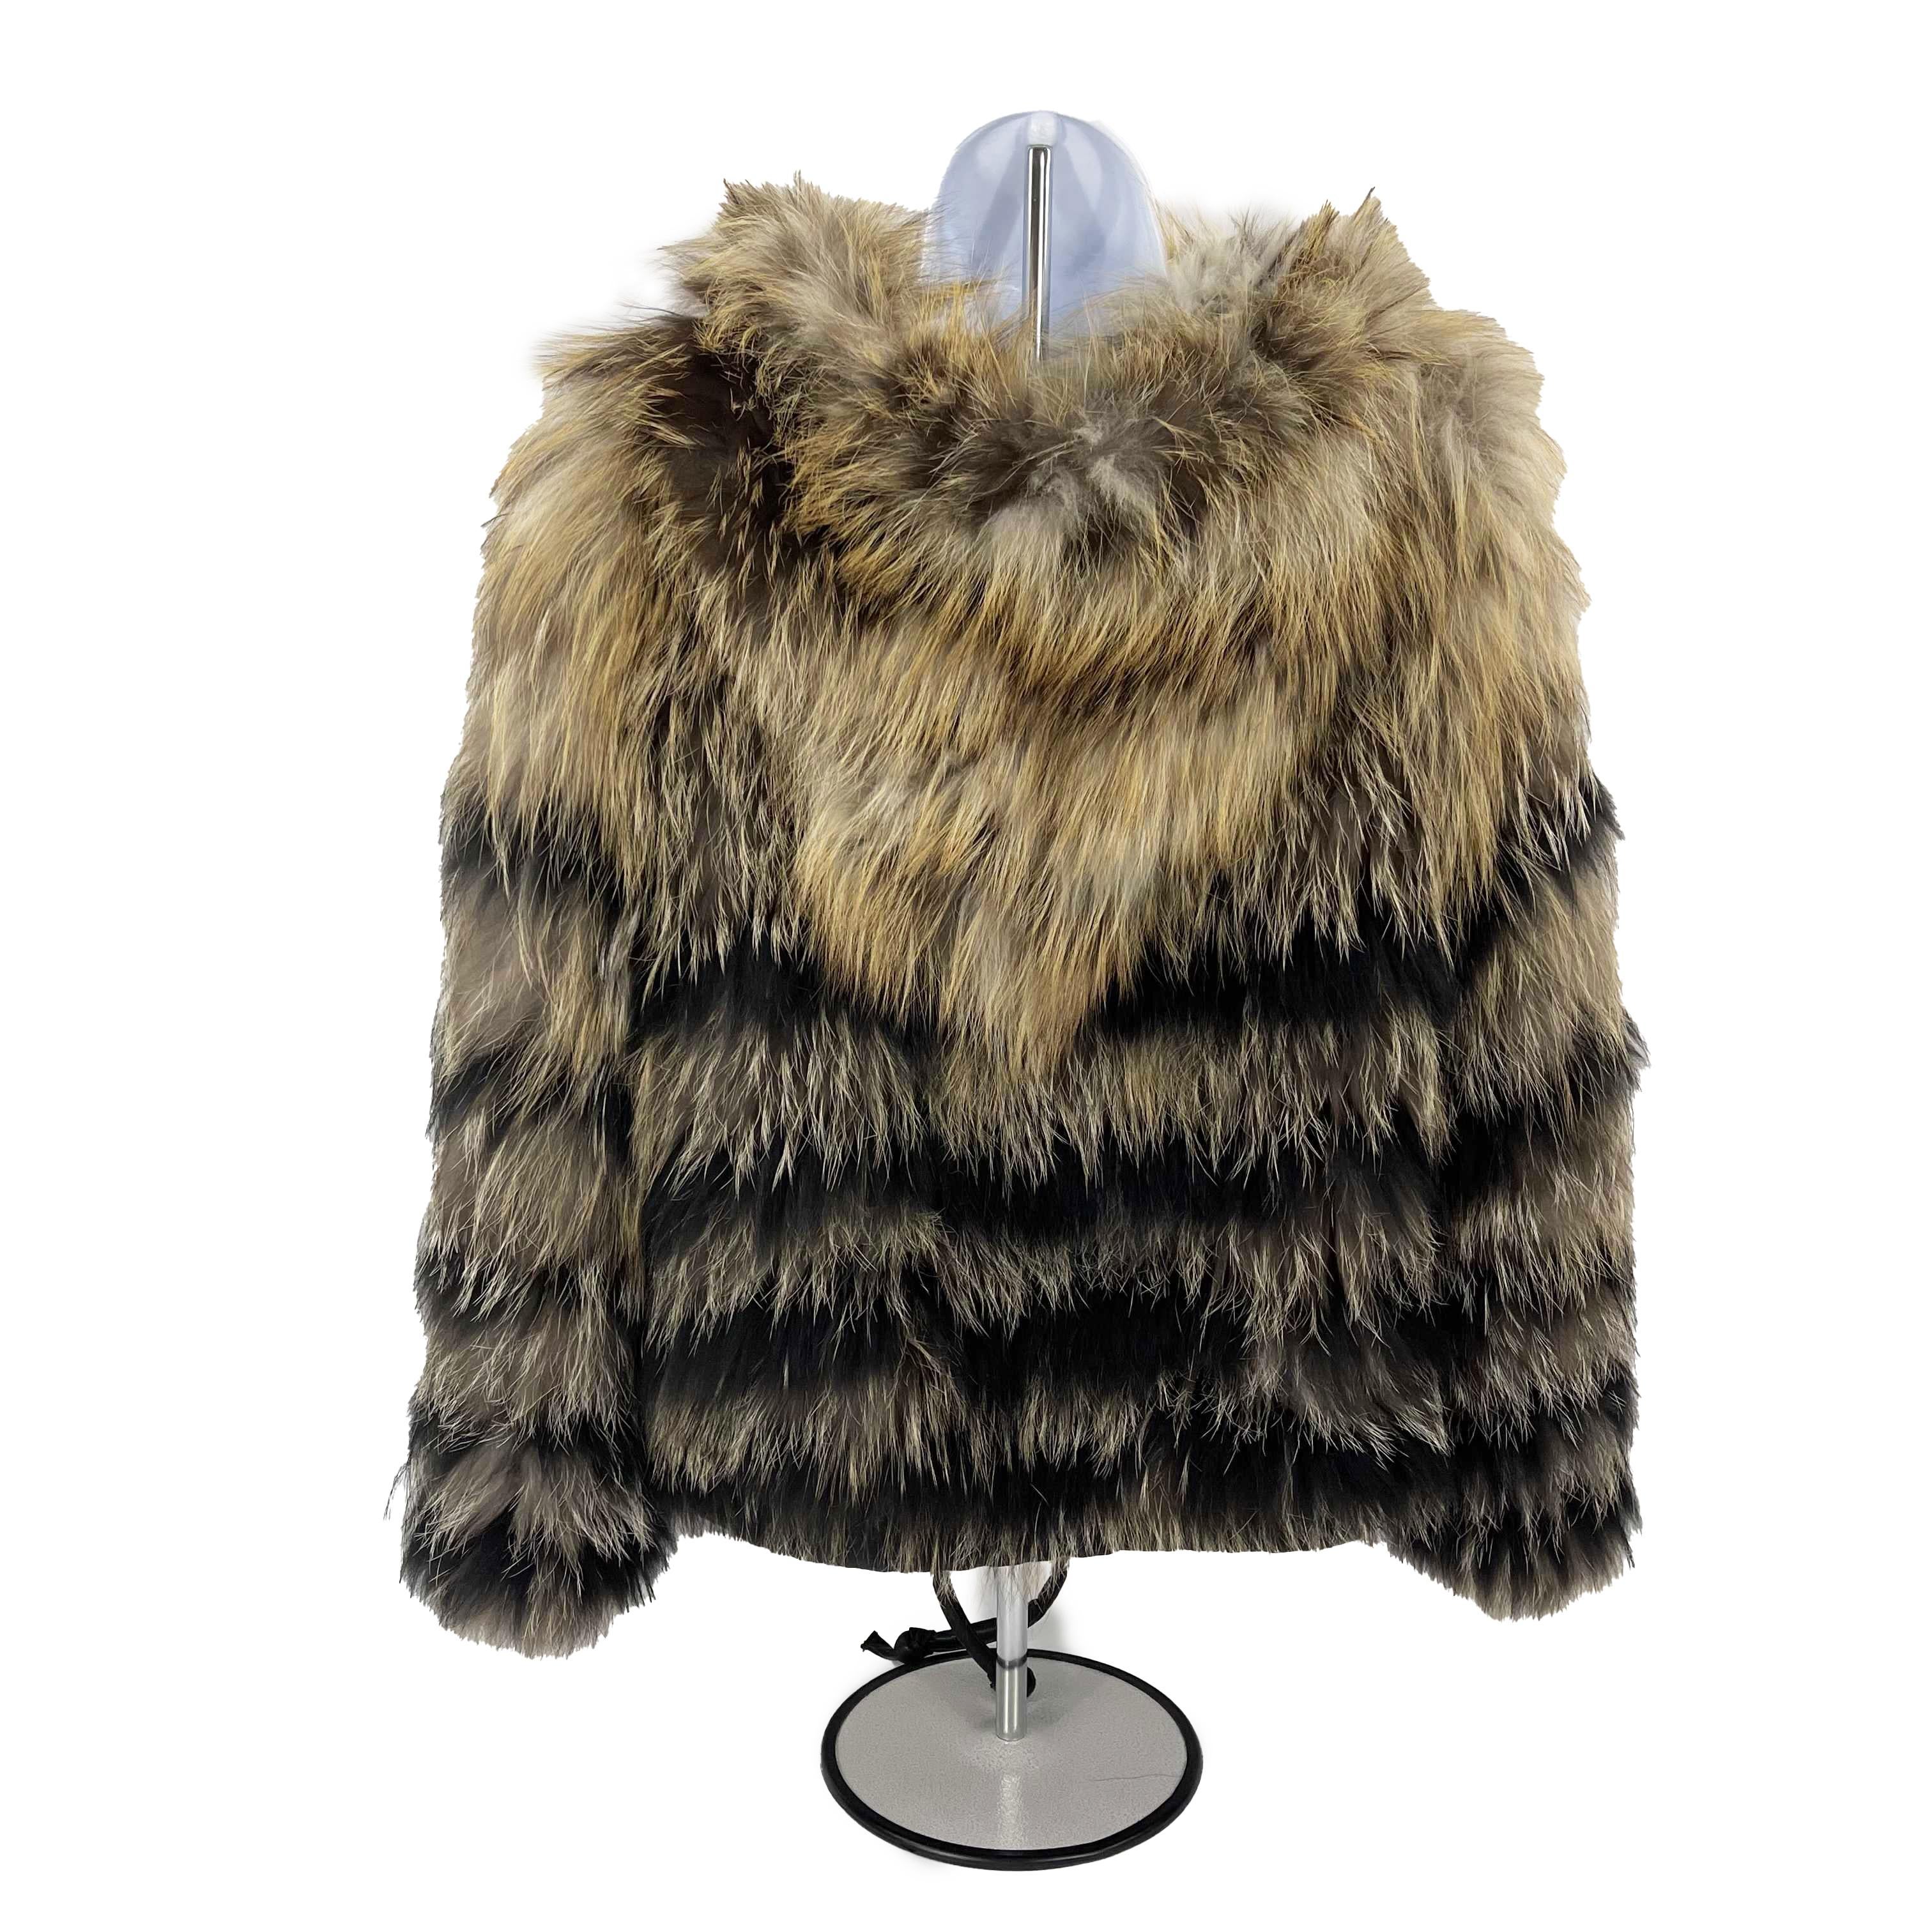 Isabel Marant - Fluffy Fox Fur Coat

Color: Black, Brown, Cream

Size: US S - Small - 1

Material: 50% fox fur, 50% lambskin


------------------------------------------------------------
 
Details:


- leather drawstring hem


- silver-tone